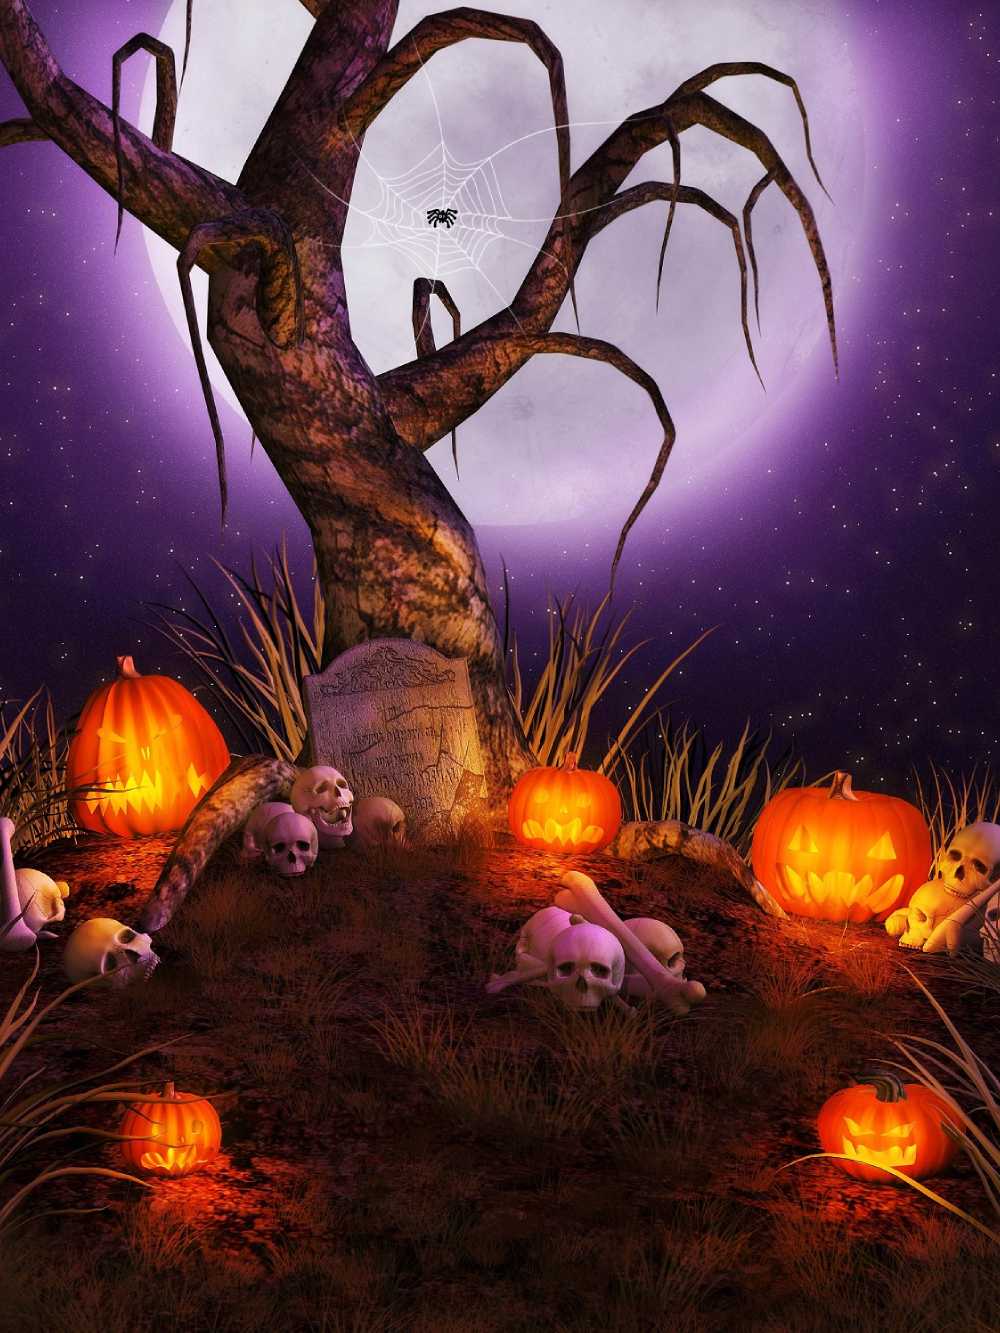 Spooky Halloween Skull Pumpkin Spider On The Tree Backdrop IBD-246871 size:1.5x2